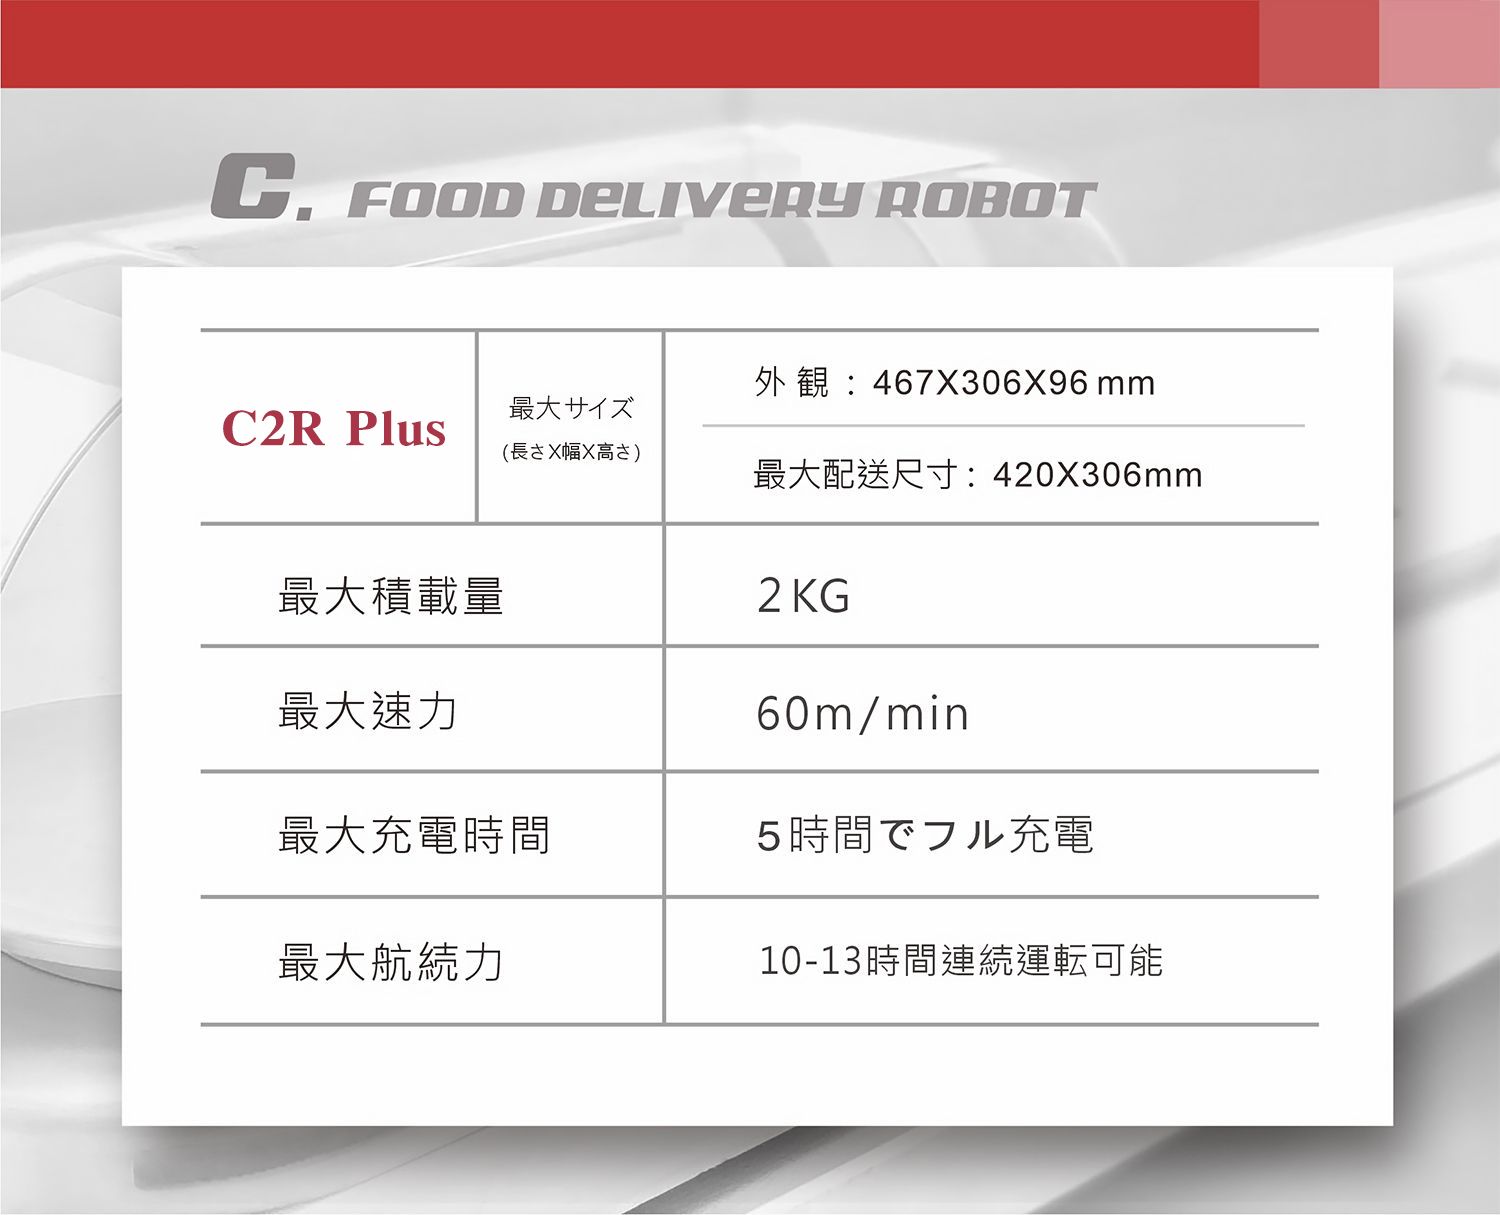 C2R PLUS Specification